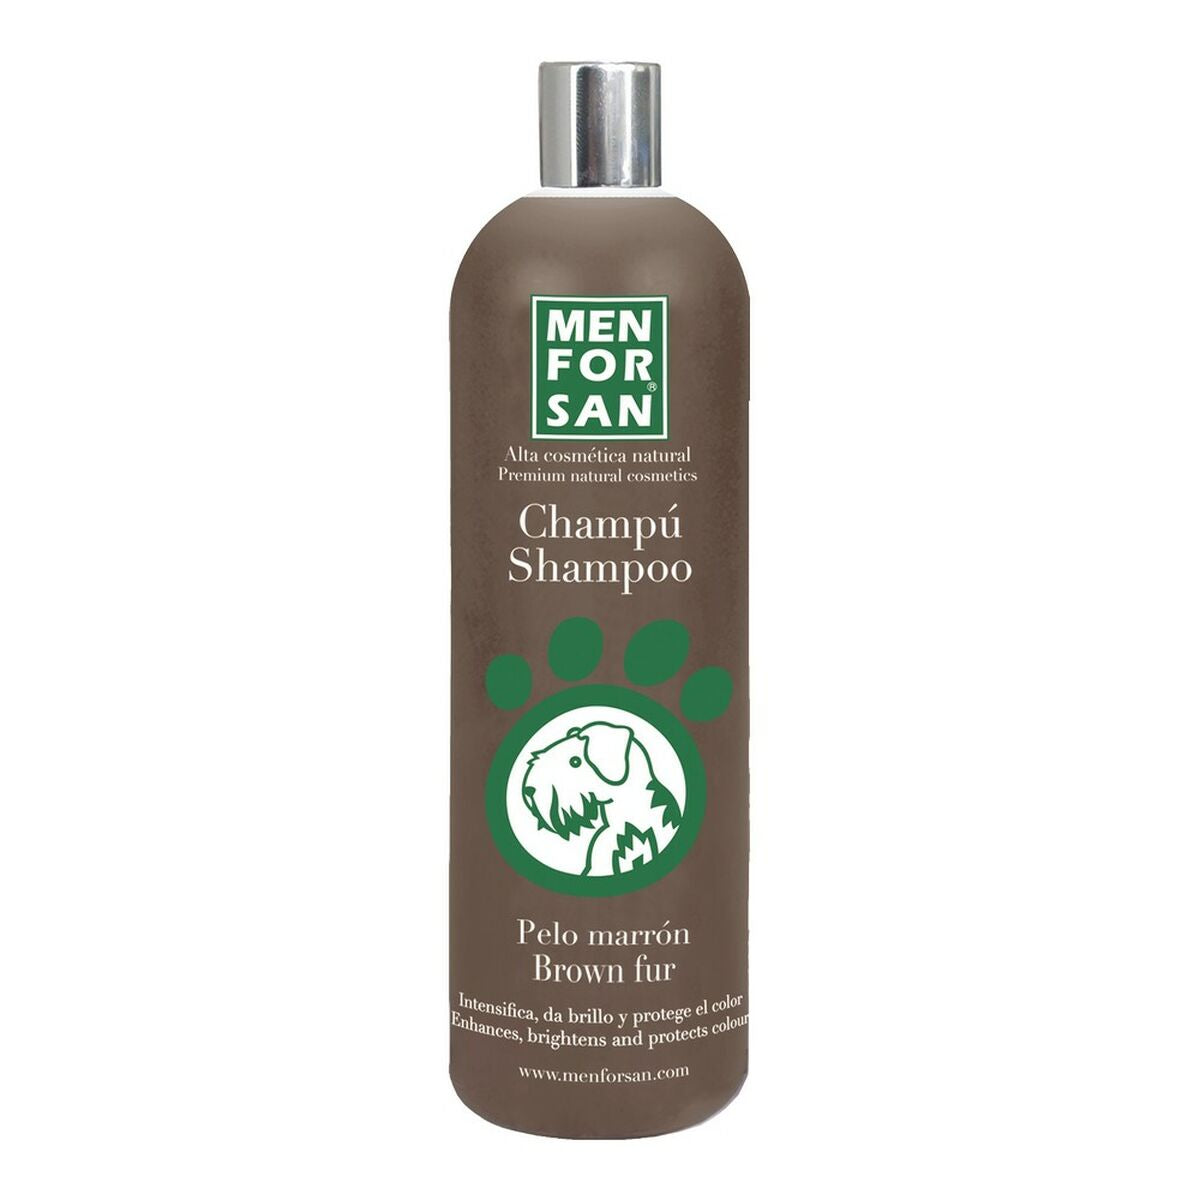 Shampoo Menforsan Hund kastanienfarbenes Haar 1 L